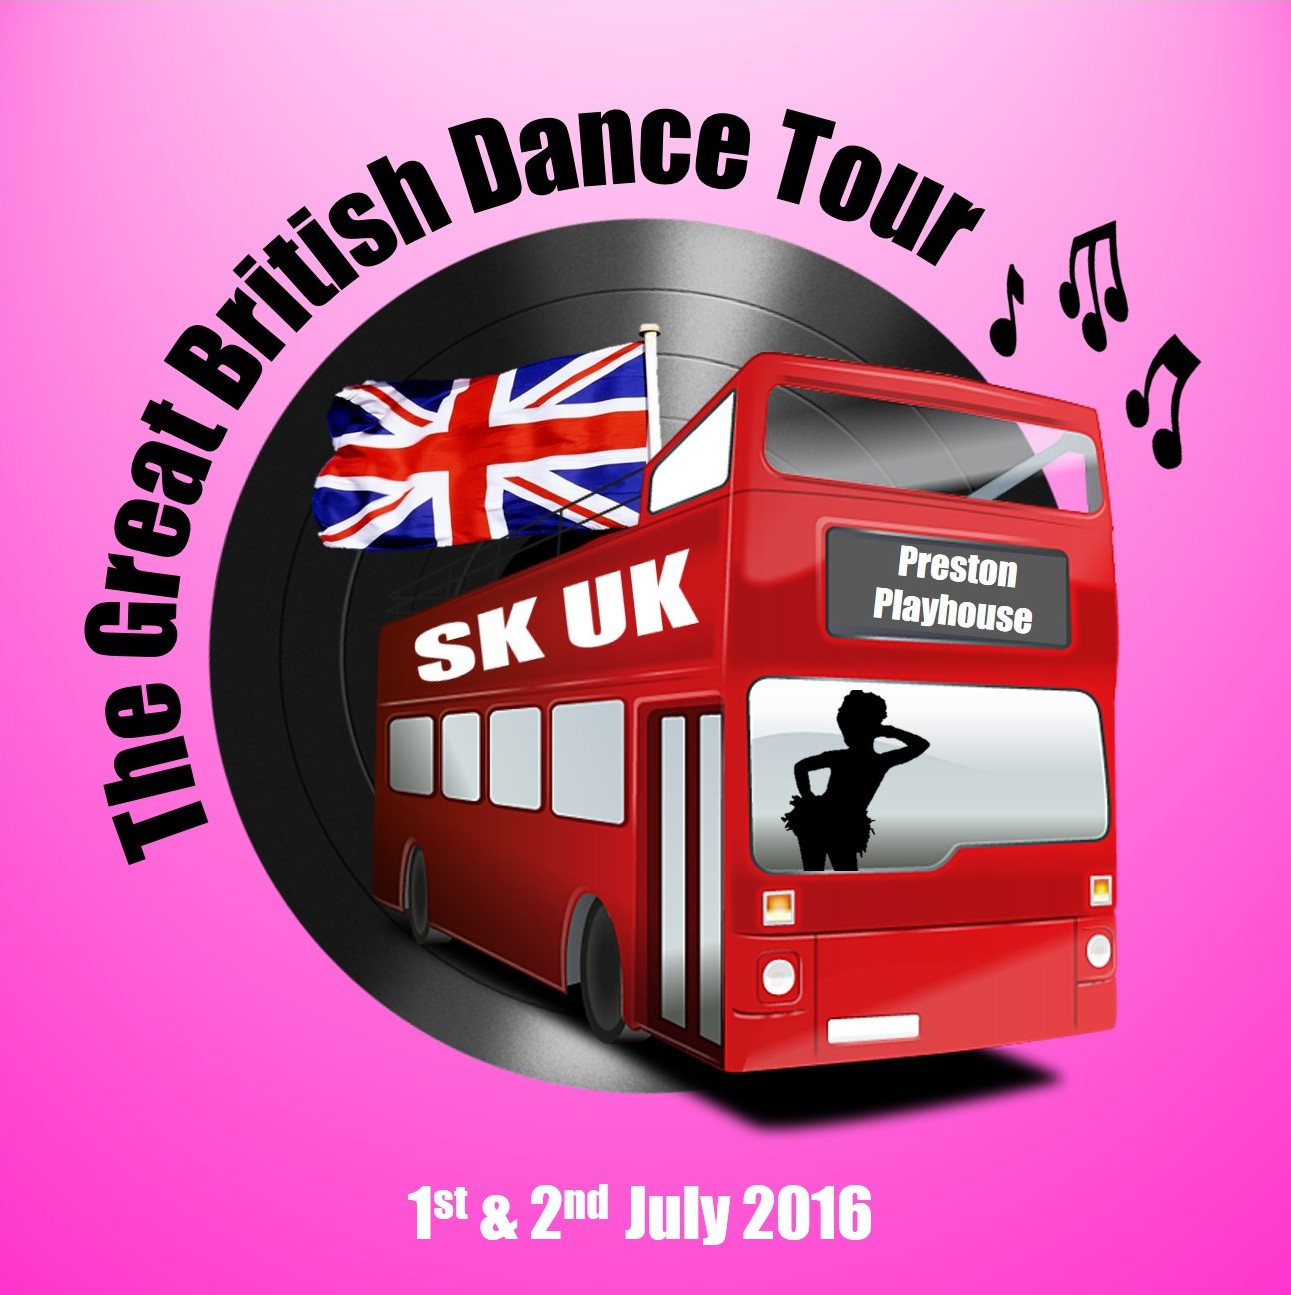 SKUK - The Great British Dance Tour Show